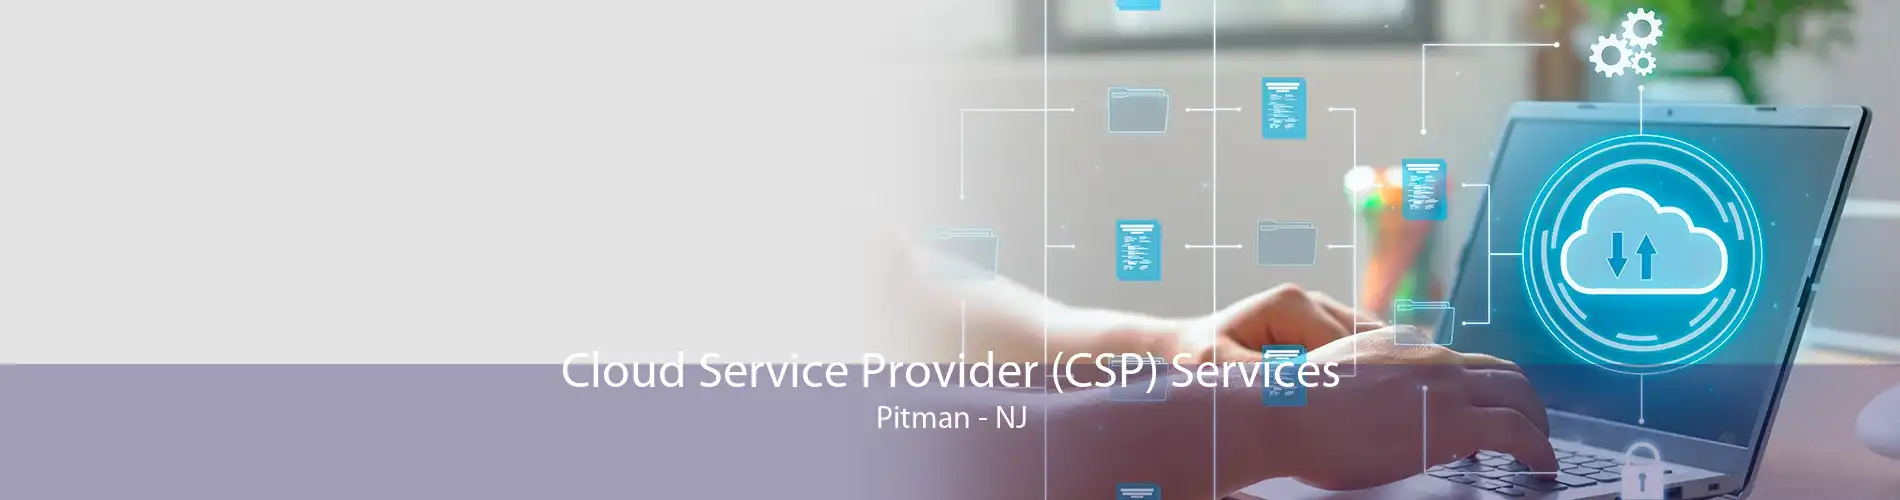 Cloud Service Provider (CSP) Services Pitman - NJ